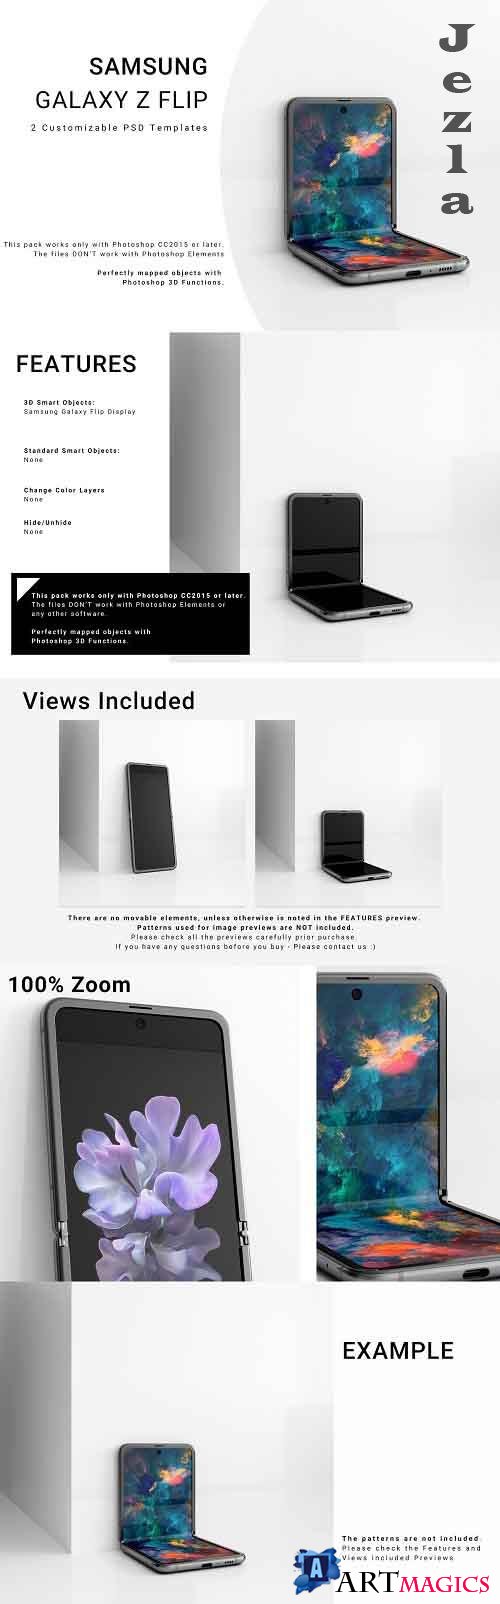 Samsung Galaxy Z Flip Mockups Set - 4607512